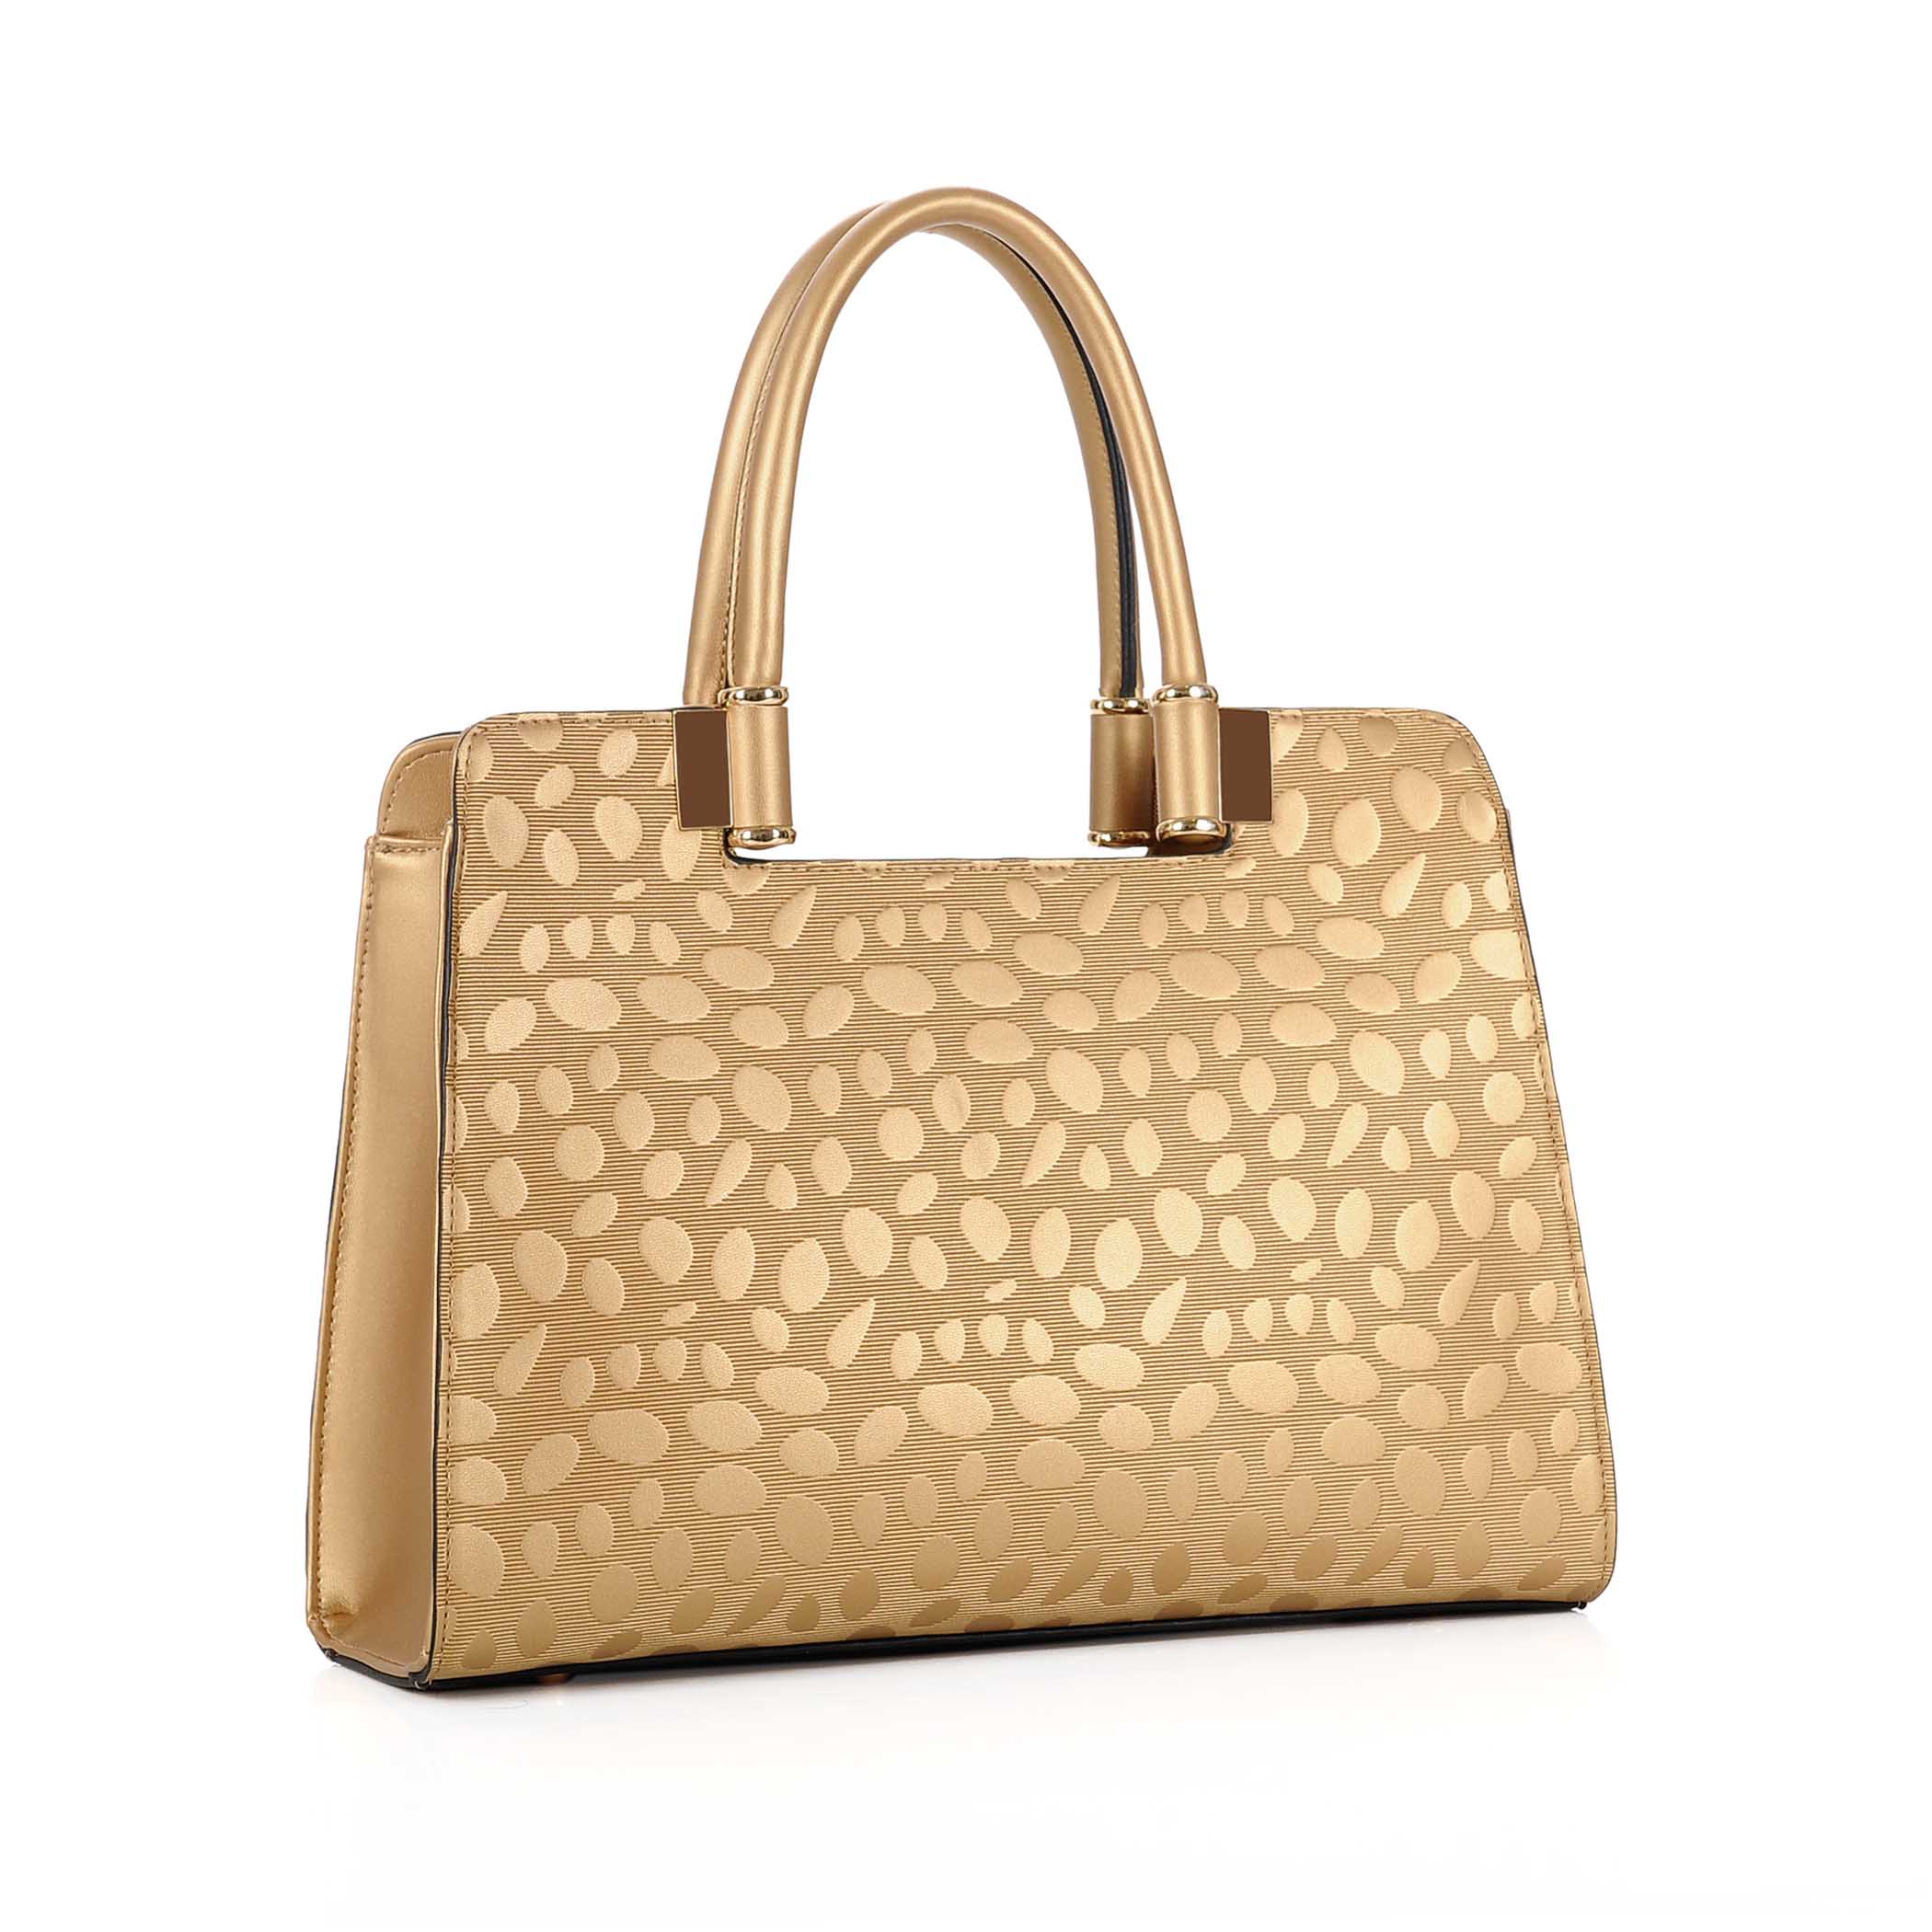 ... Cheap Designer Handbags Women Bags Crocodile Elegant Bag From China